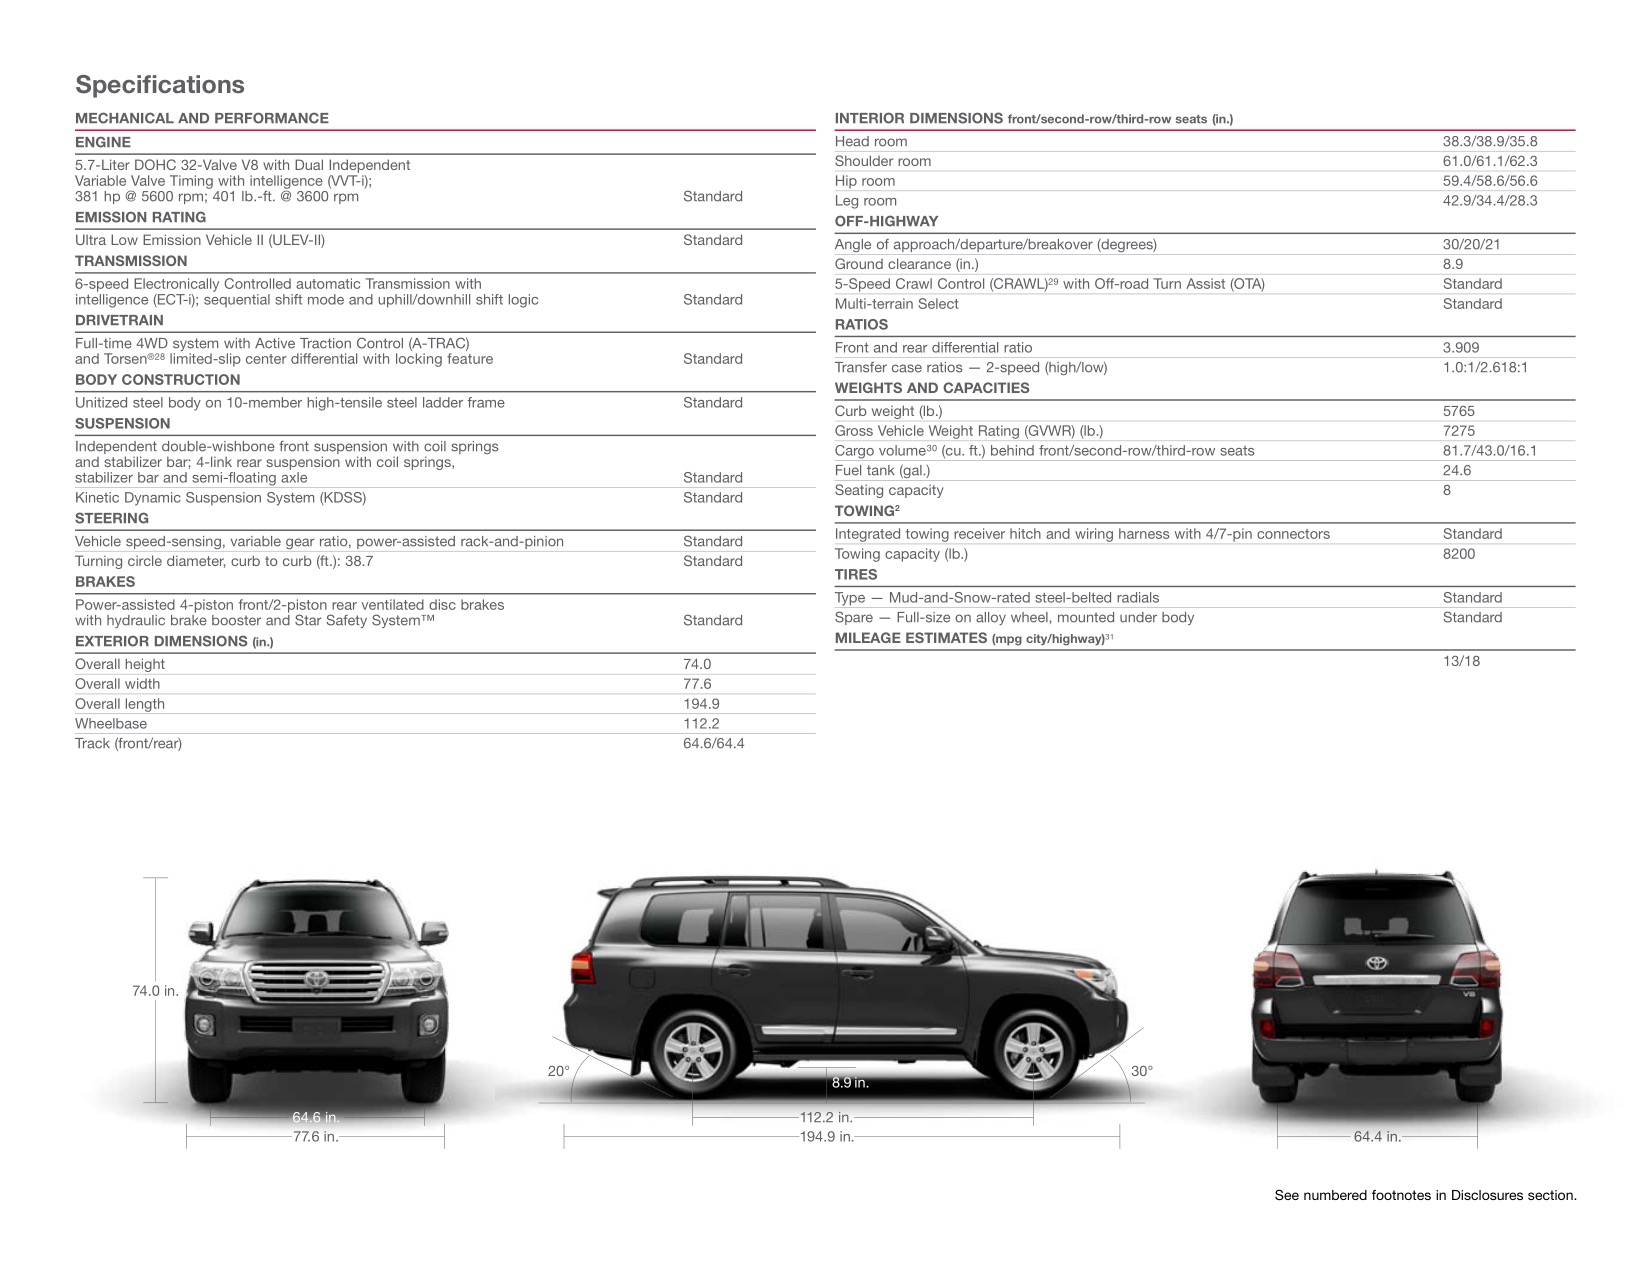 2013 Toyota Land Cruiser Brochure Page 1